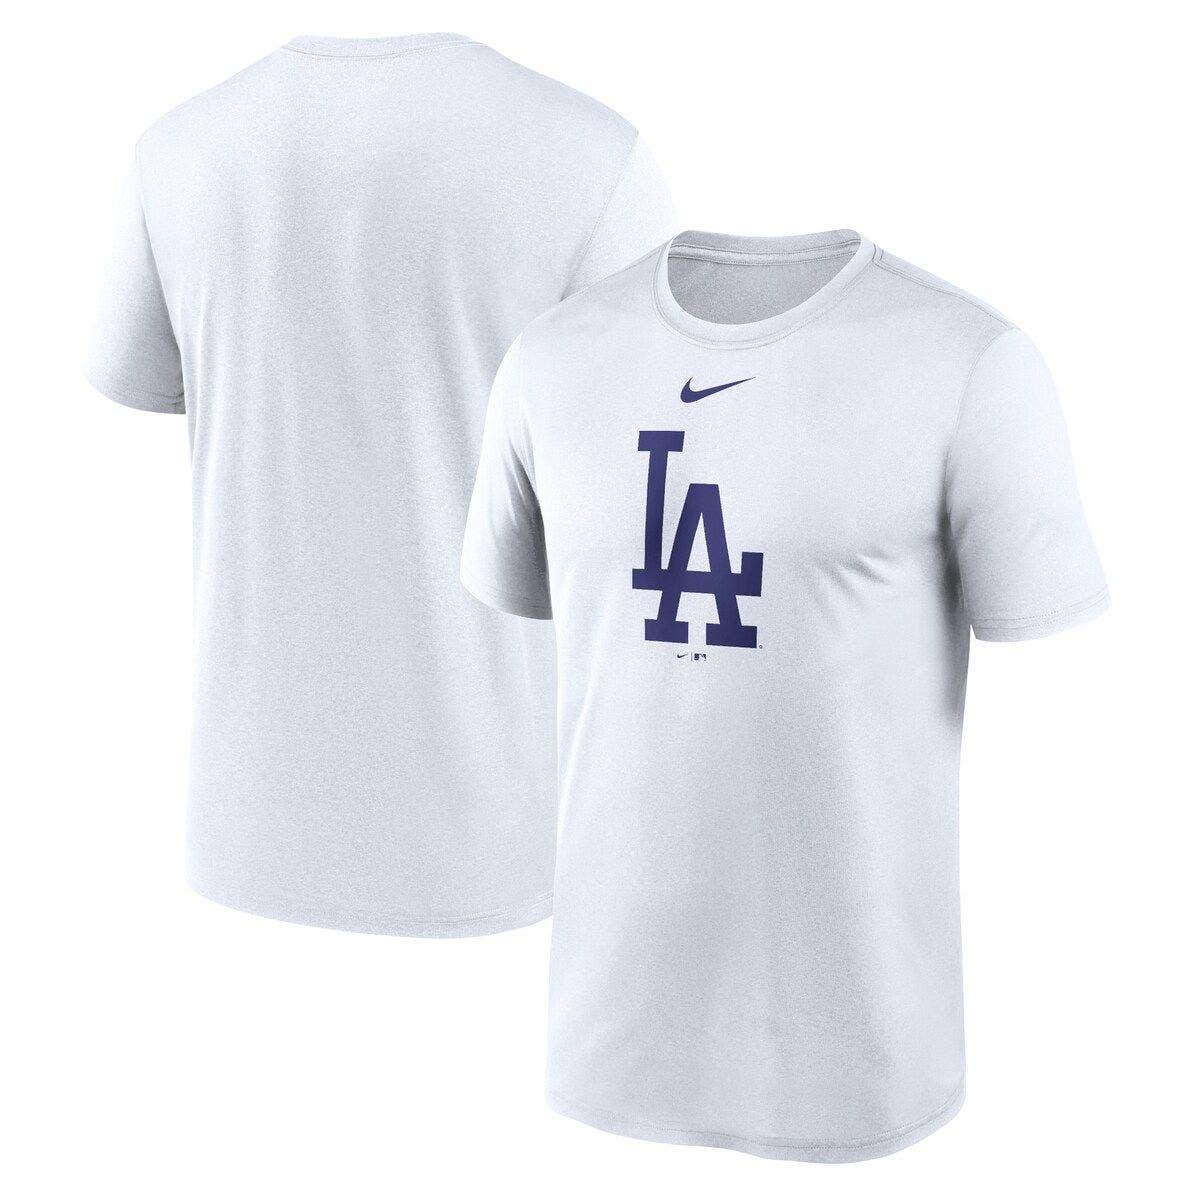 Nike Dri-FIT Icon Legend (MLB Los Angeles Angels) Men's T-Shirt